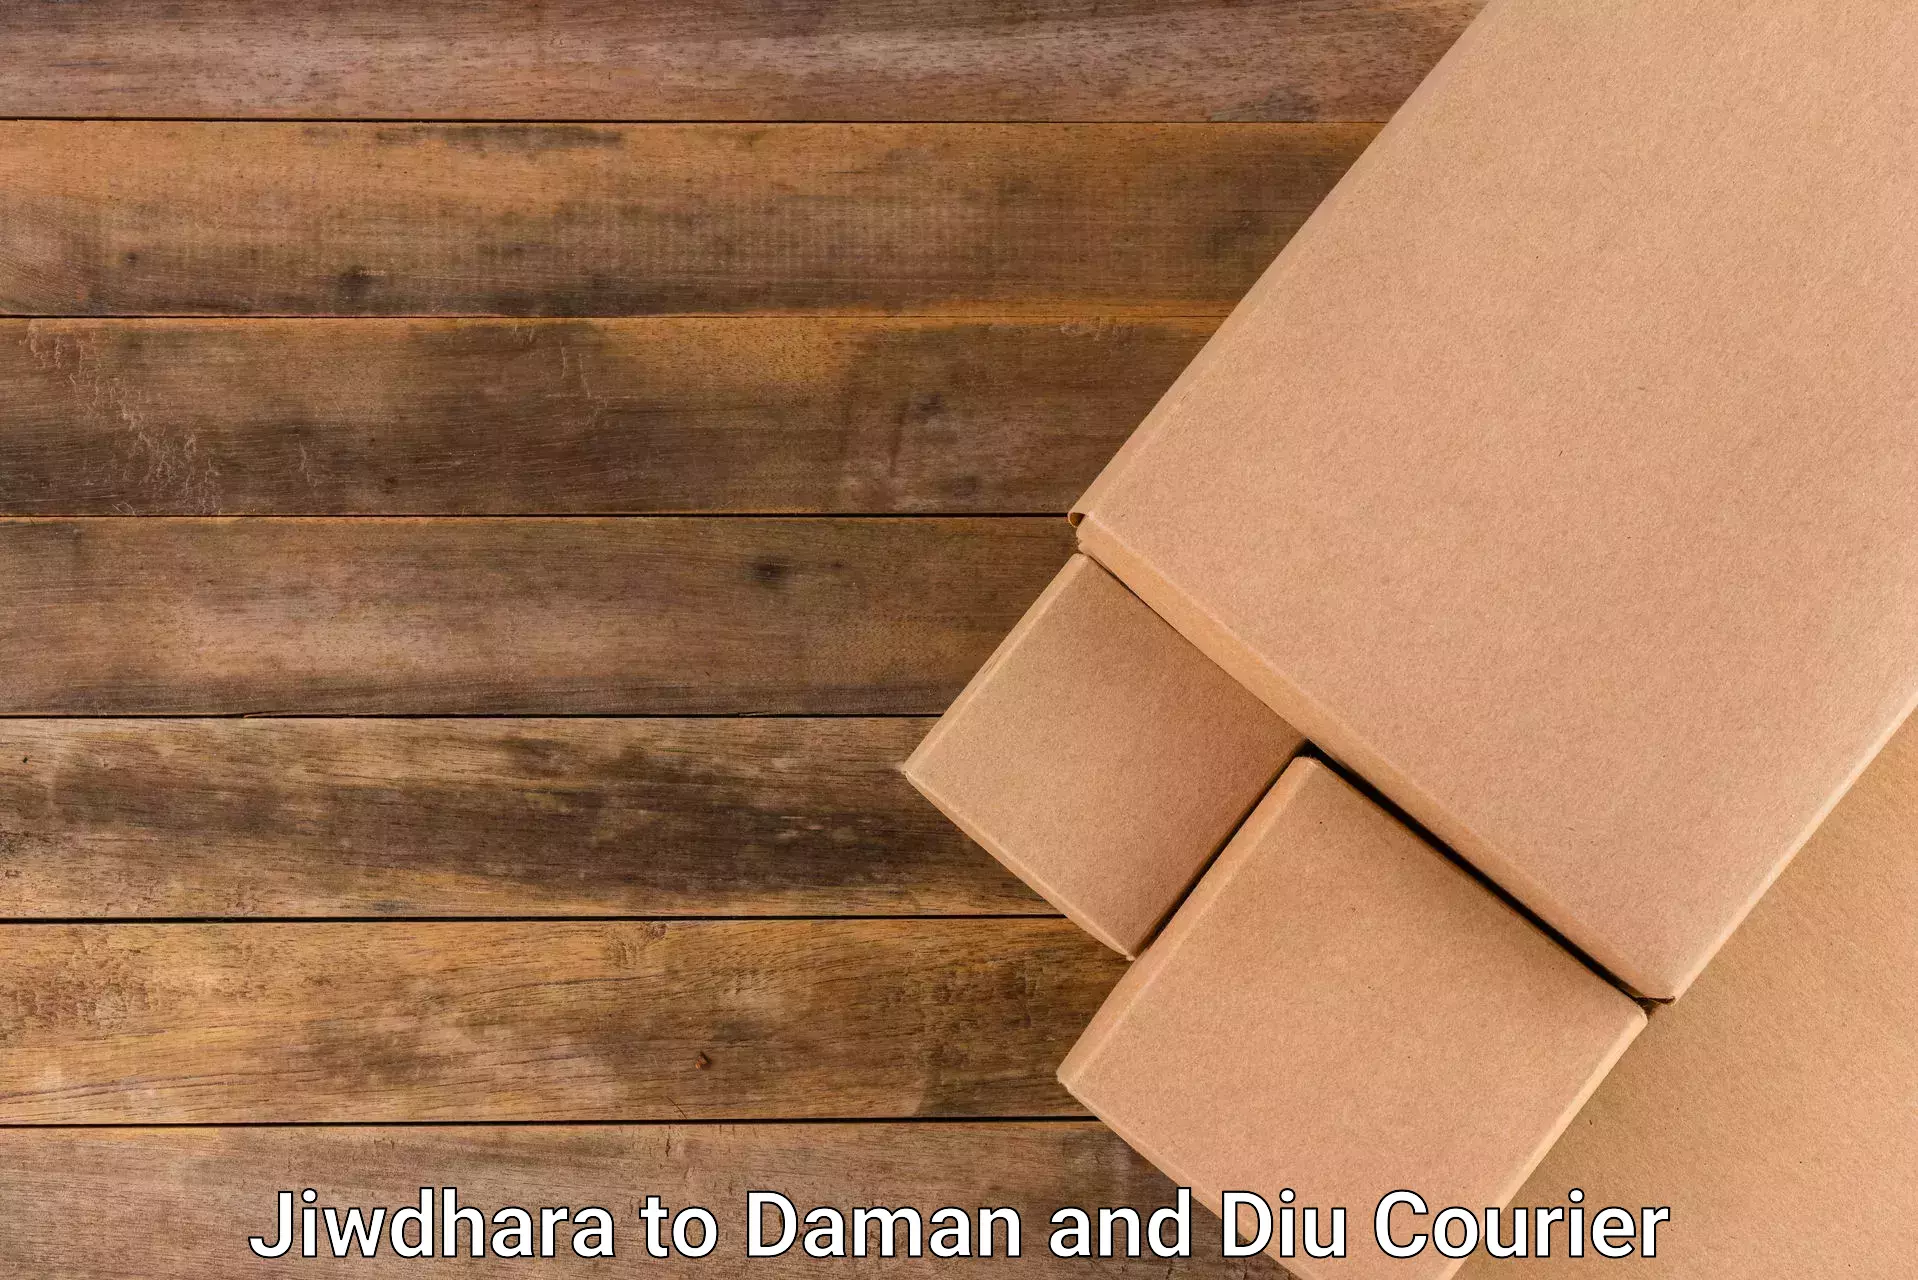 24-hour delivery options Jiwdhara to Diu